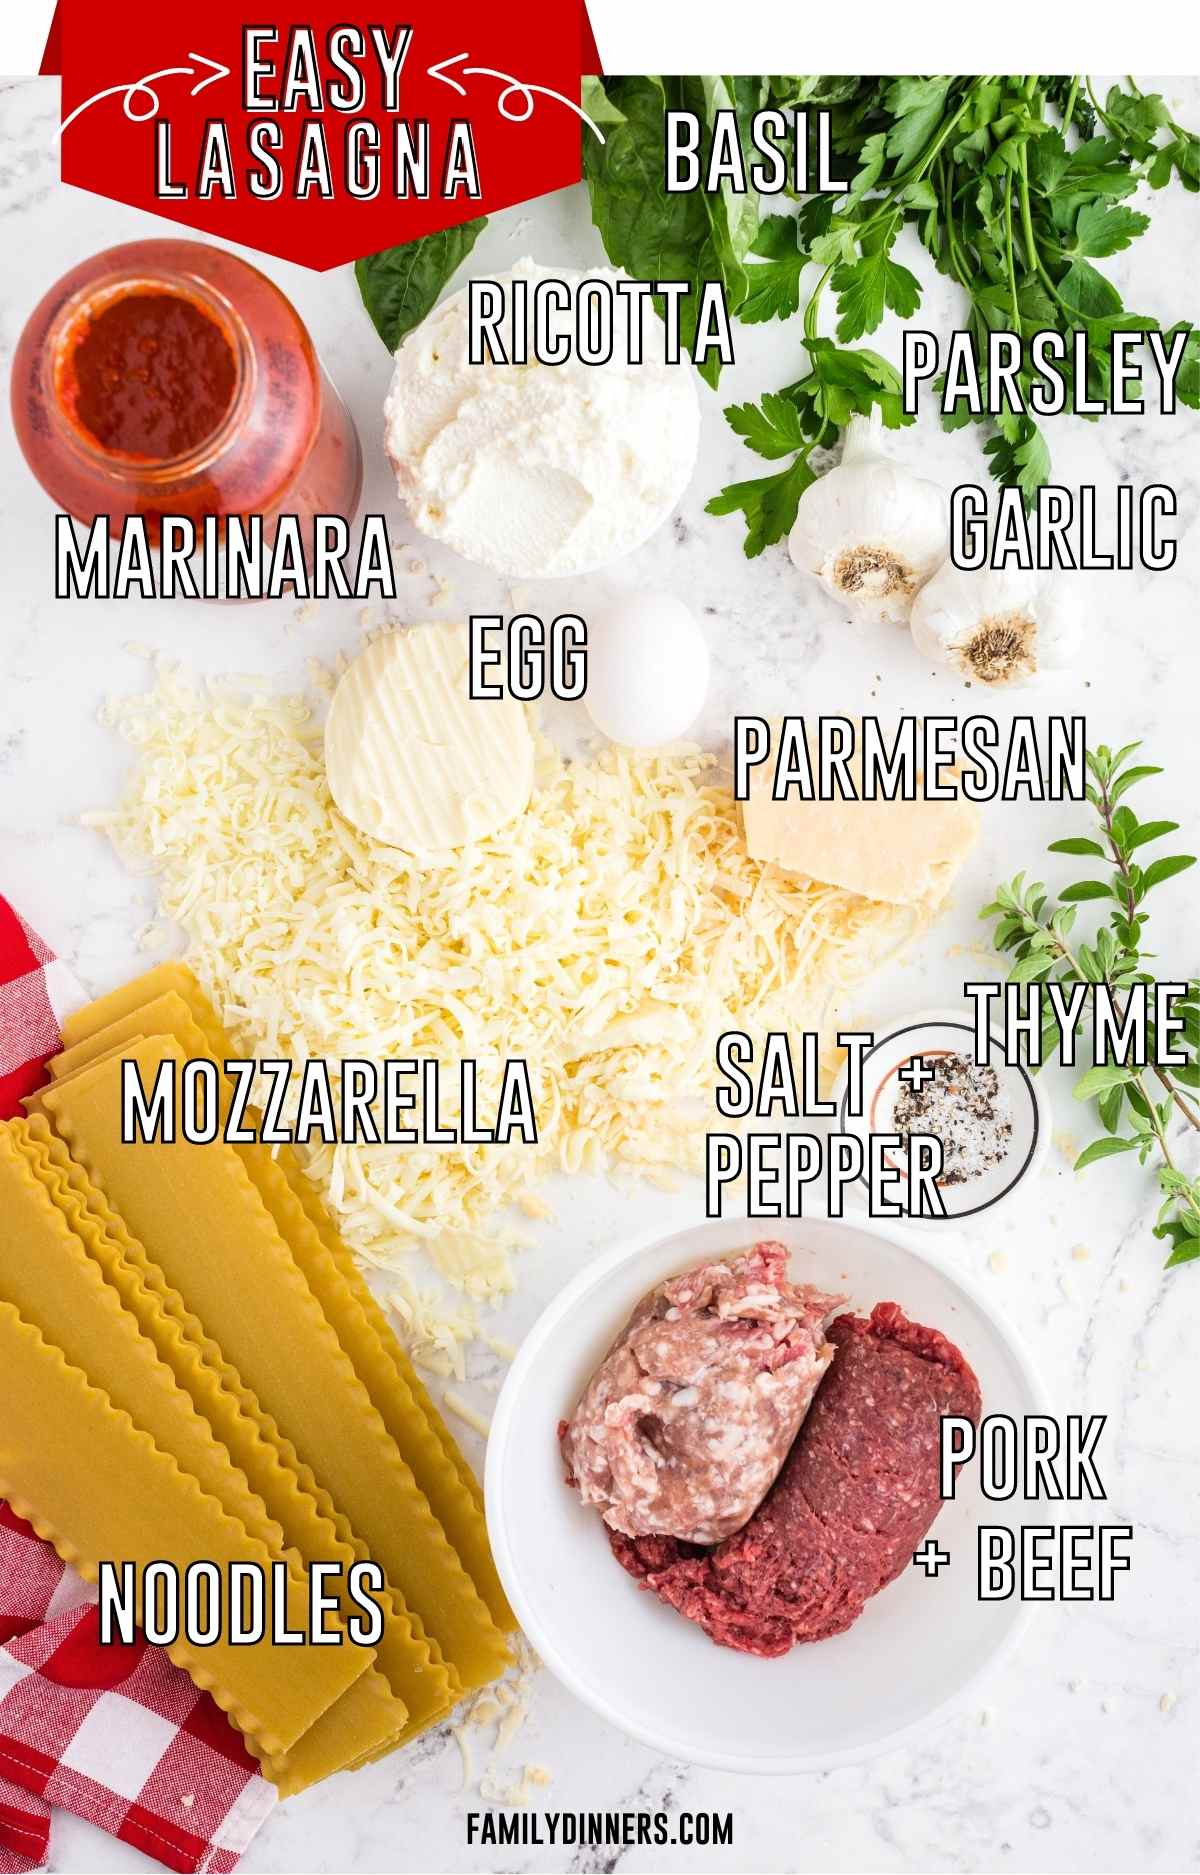 lasagna ingredients - cheeses, marinara, noodles, spices, meat, egg